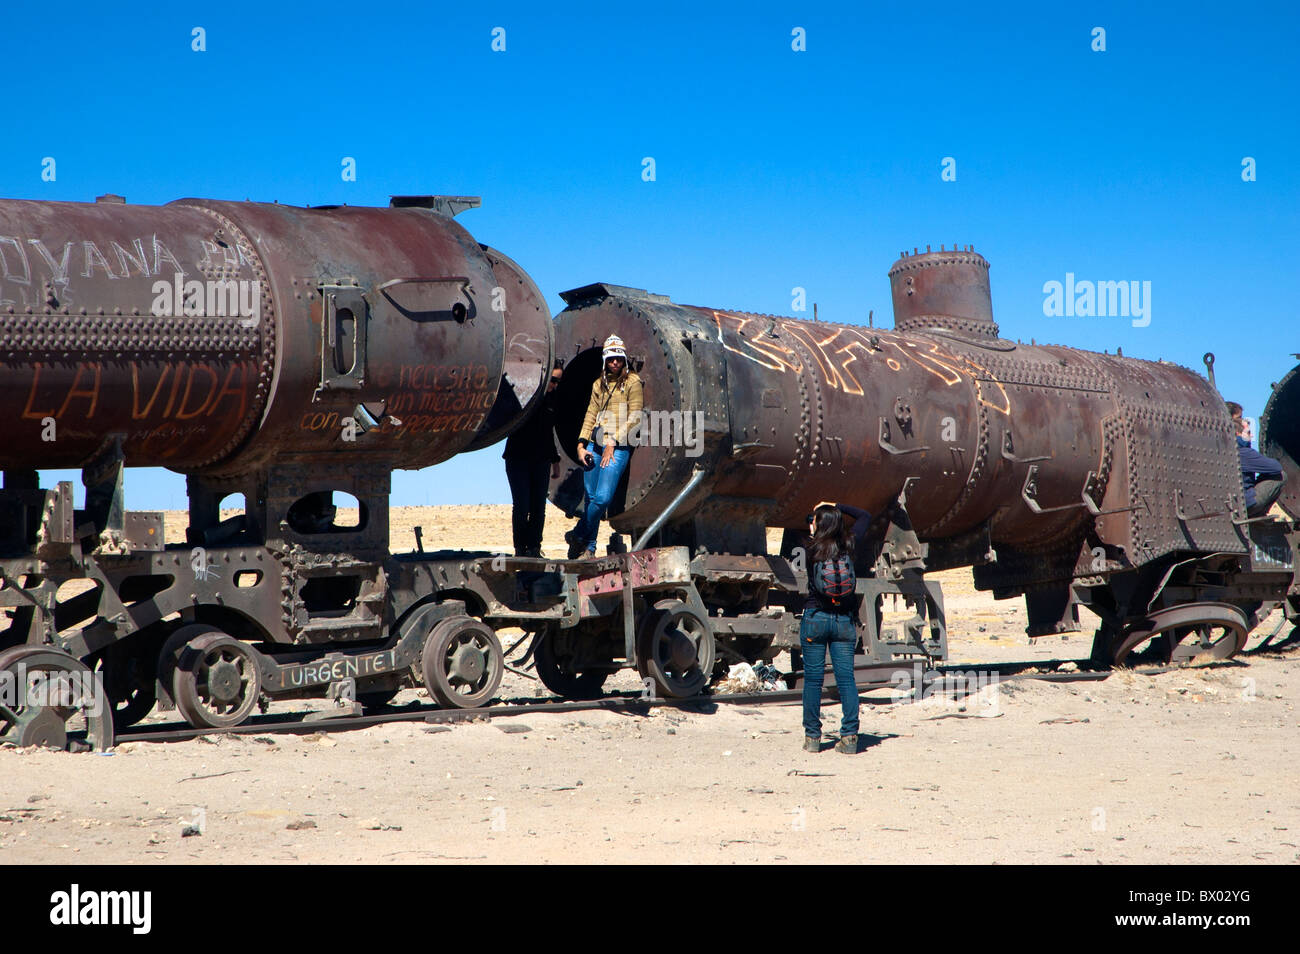 Rusting steam engines at the train and railway graveyard at Uyuni, on the Salar de Uyuni, Bolivia. Stock Photo